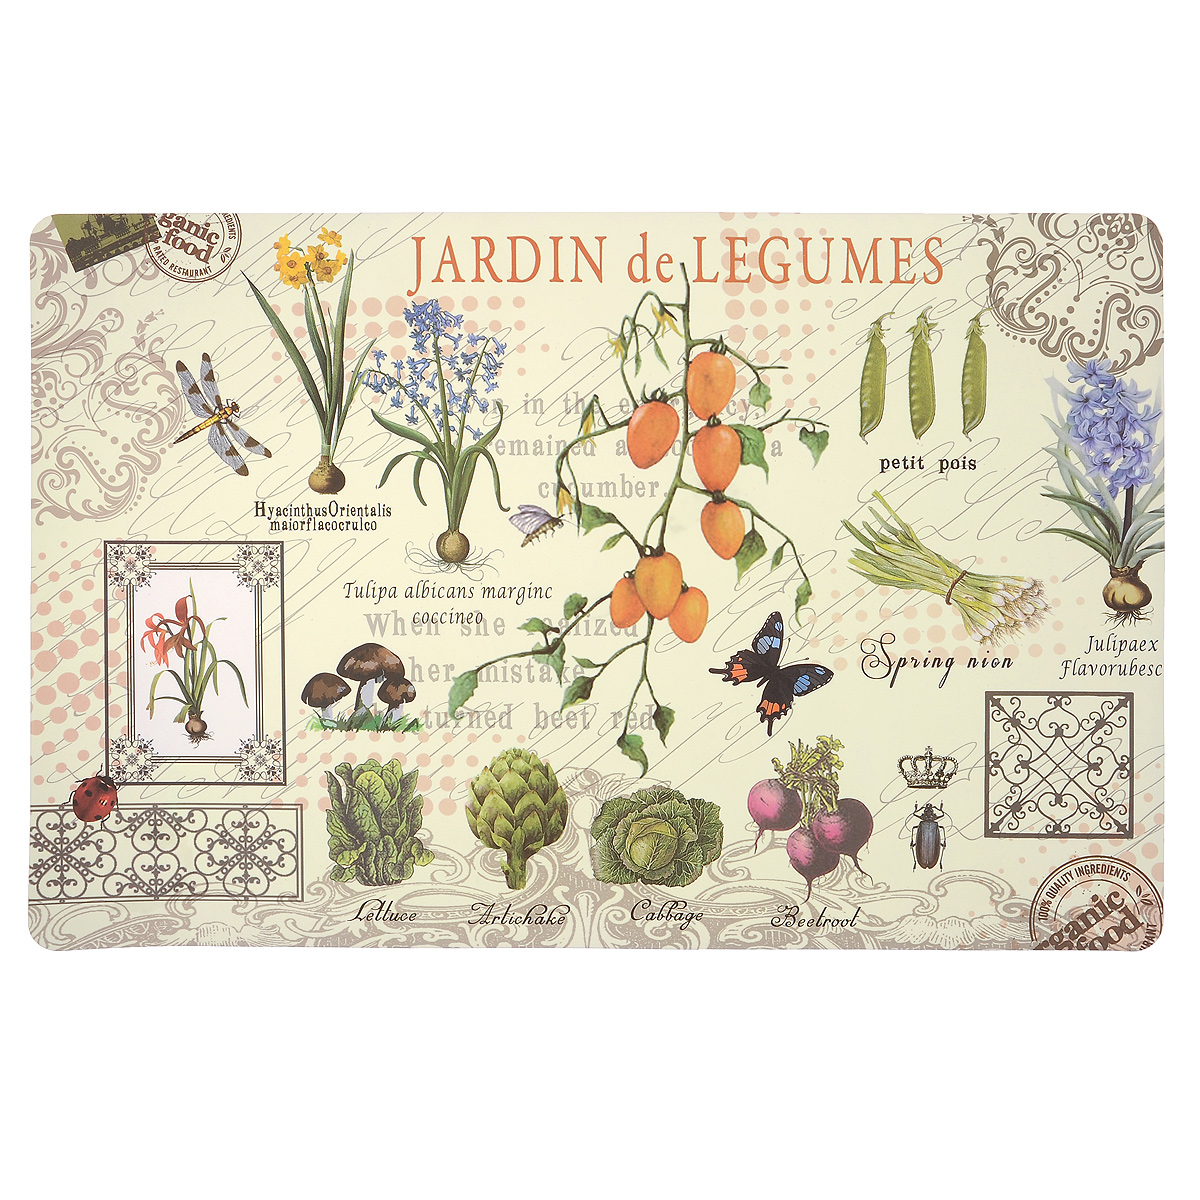    Hans & Gretchen Jardin de Legumes, 43,5   28,5  - Hans & Gretchen - Hans & Gretchen28HZ-9071    Hans & Gretchen Jardin de Legumes    . ,   ,      .            .   ,     -         .           ,          .  : 43,5   28,5 .